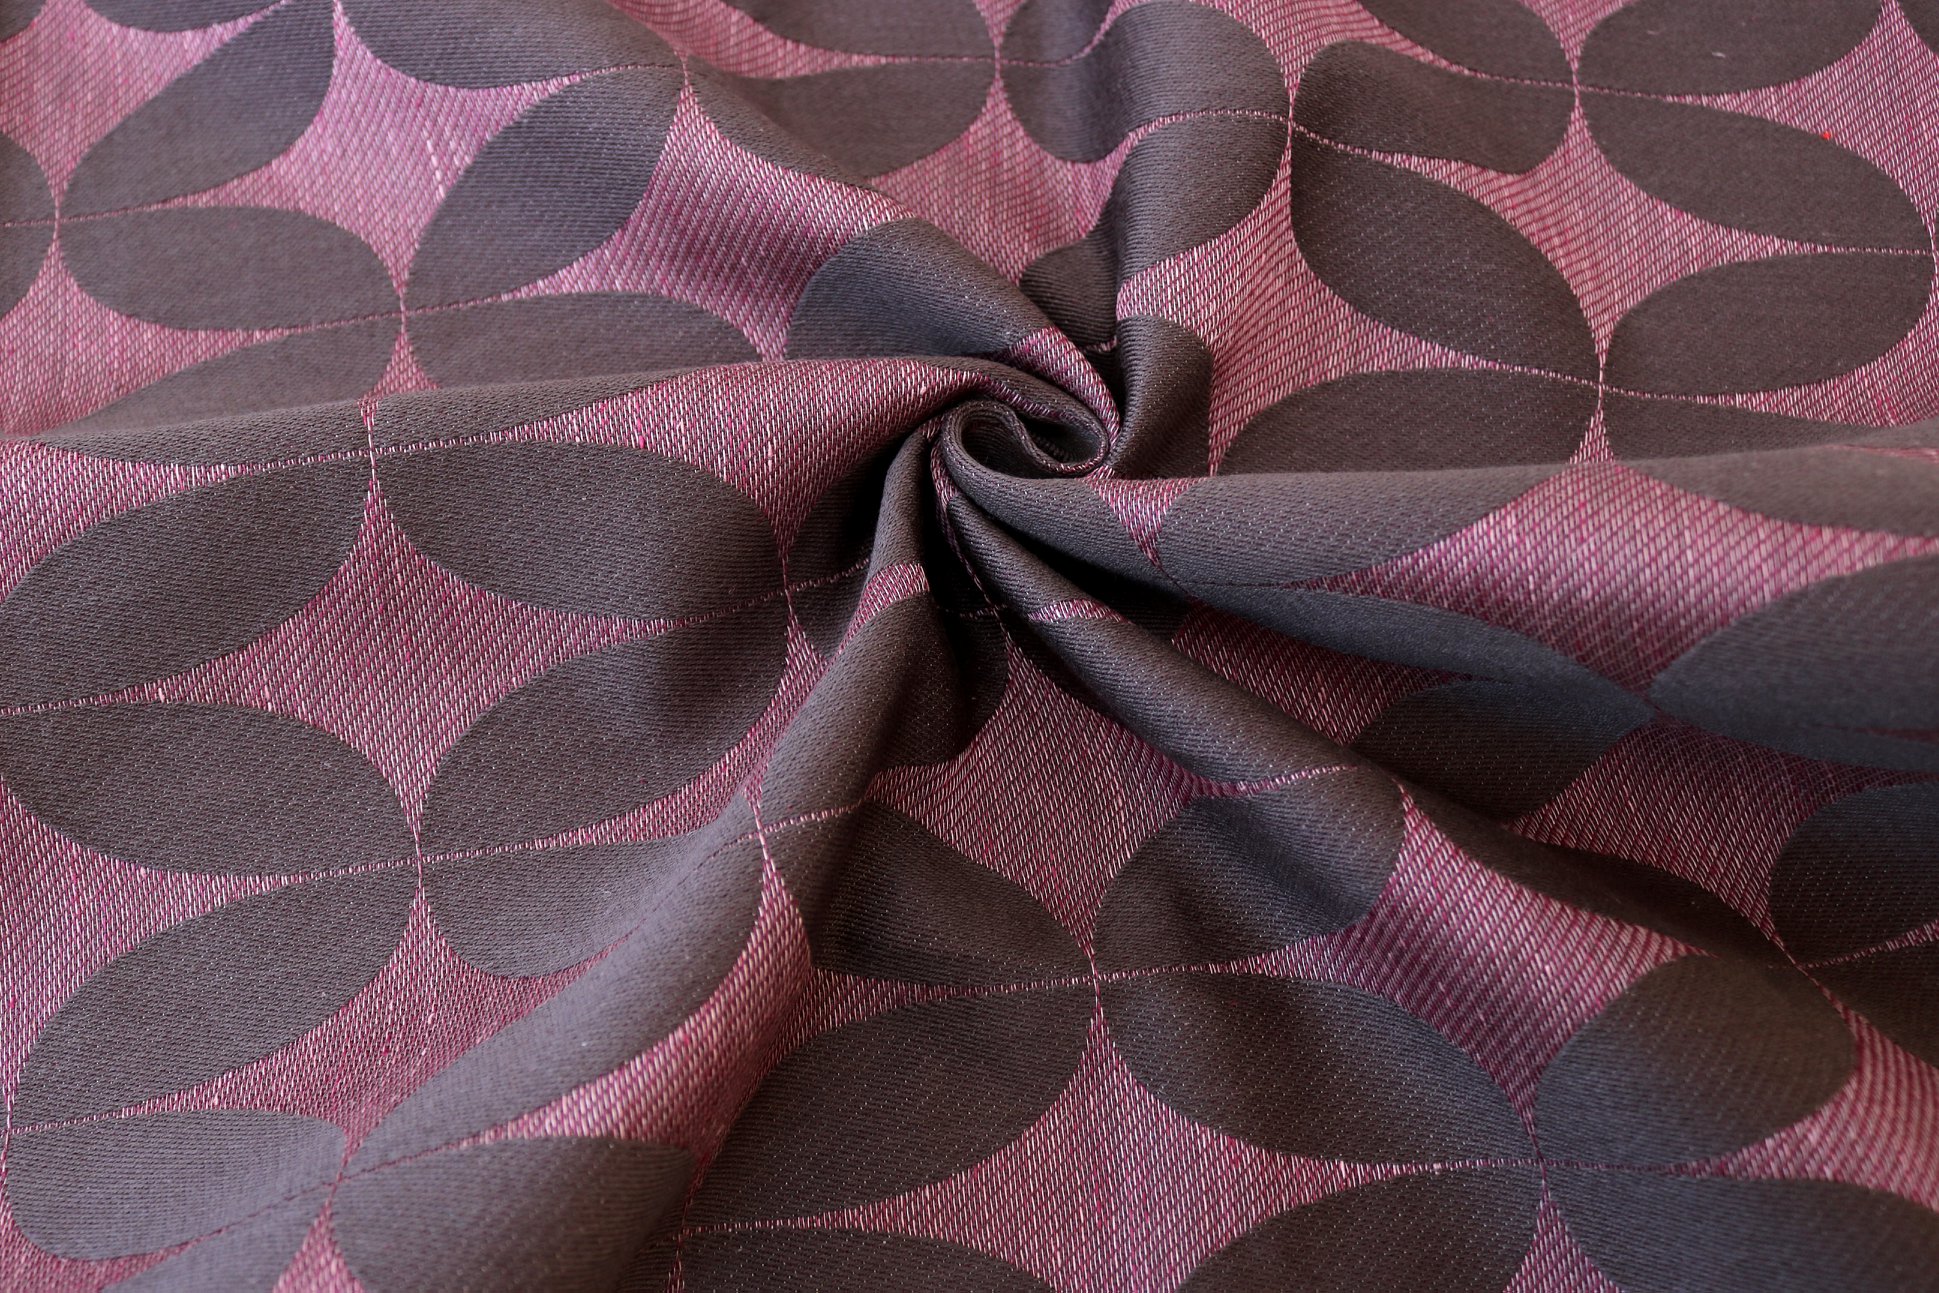 KindsKnopf TulpenStern TS Raspberry Chocolate Wrap (linen) Image